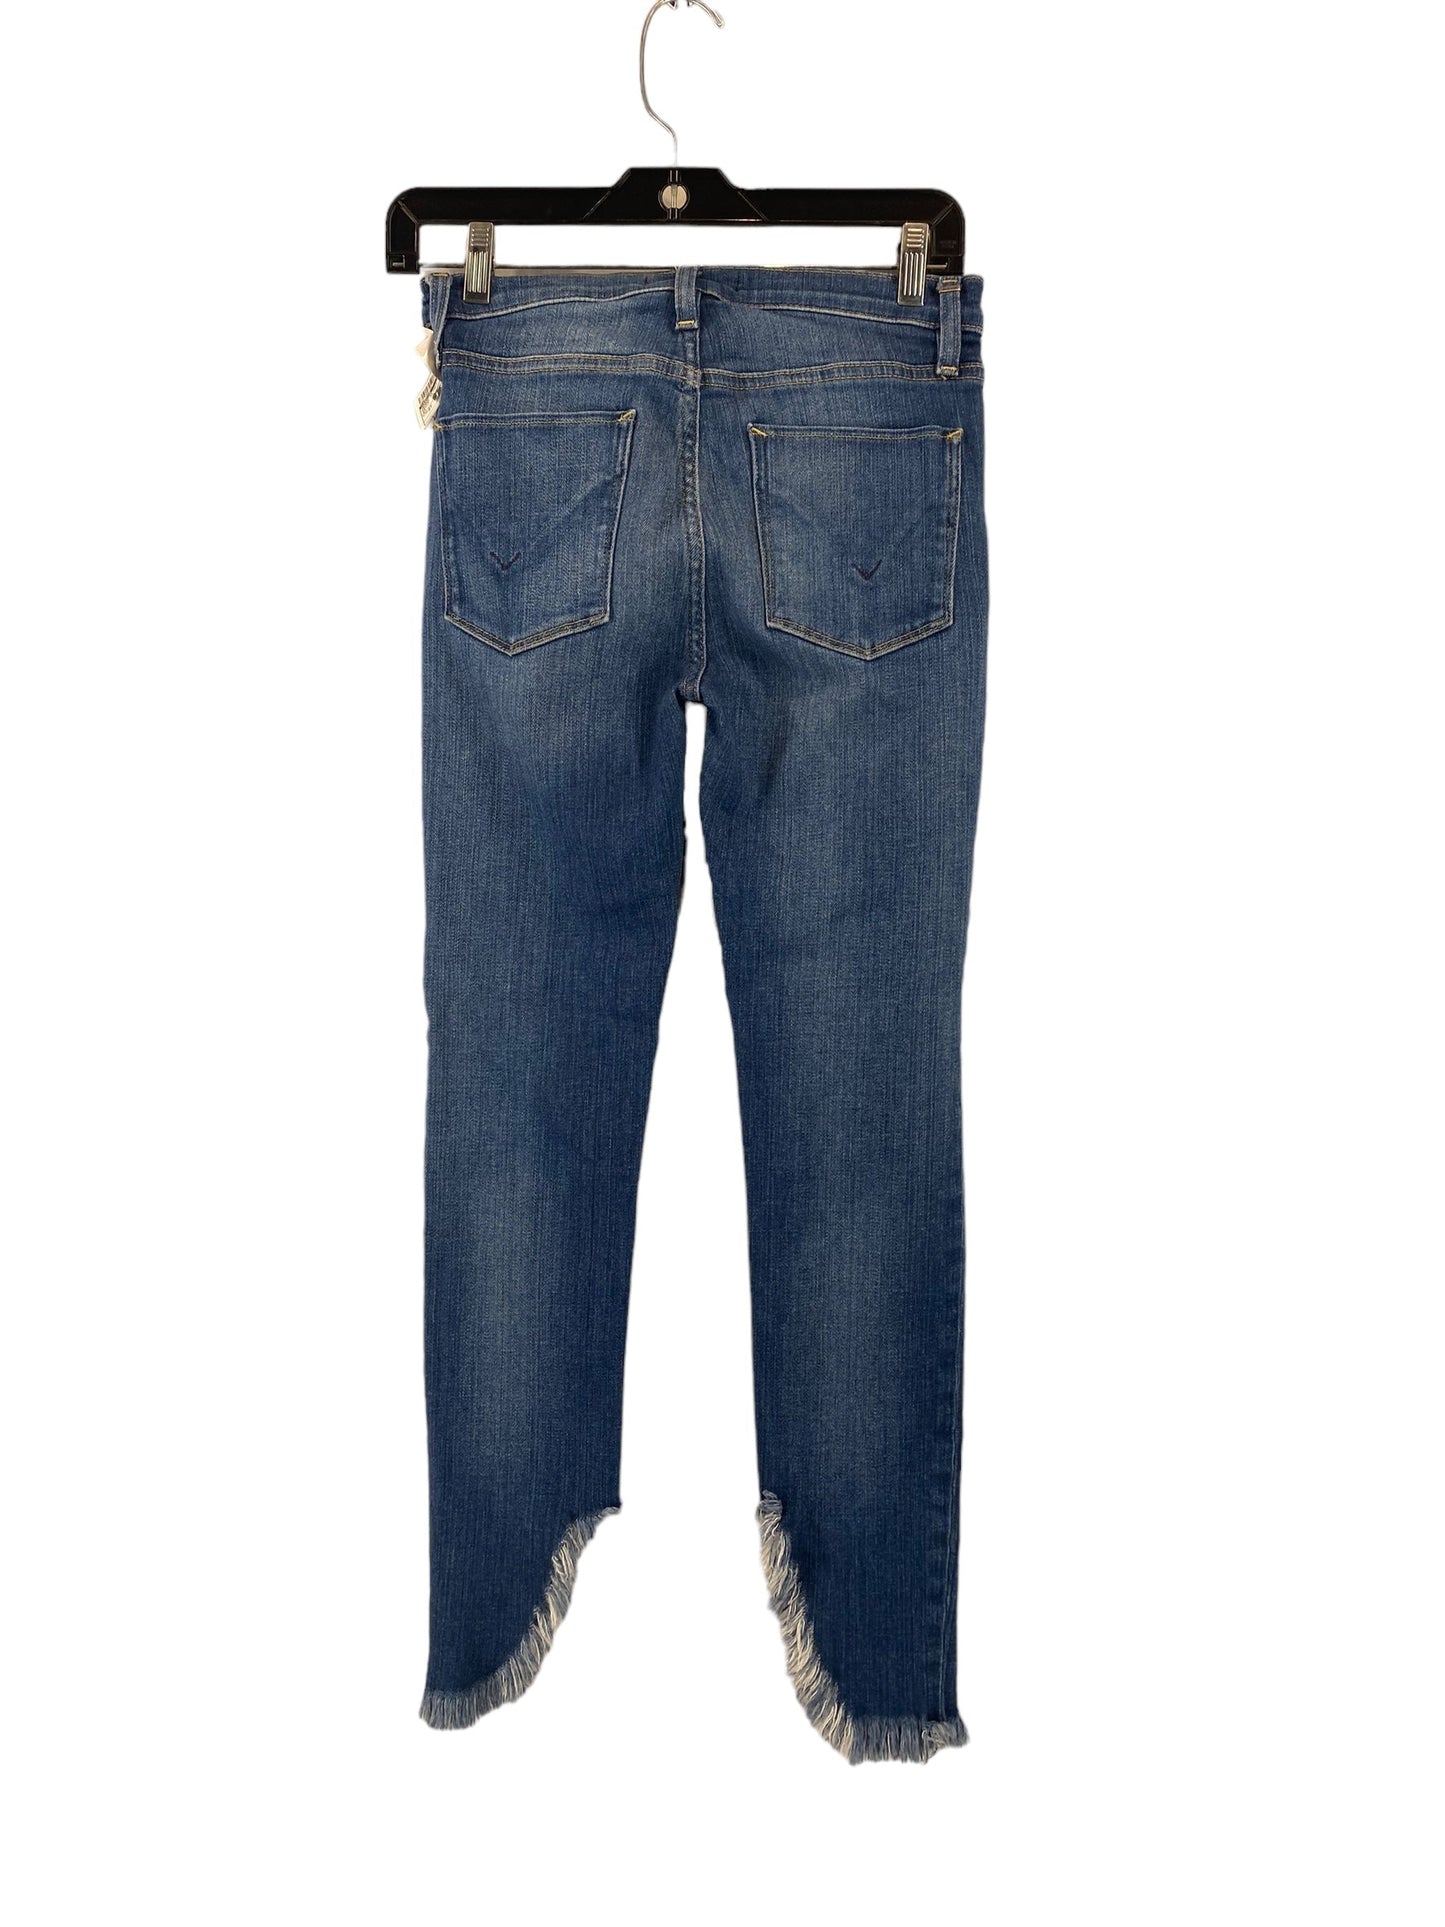 Jeans Skinny By Hudson  Size: 27